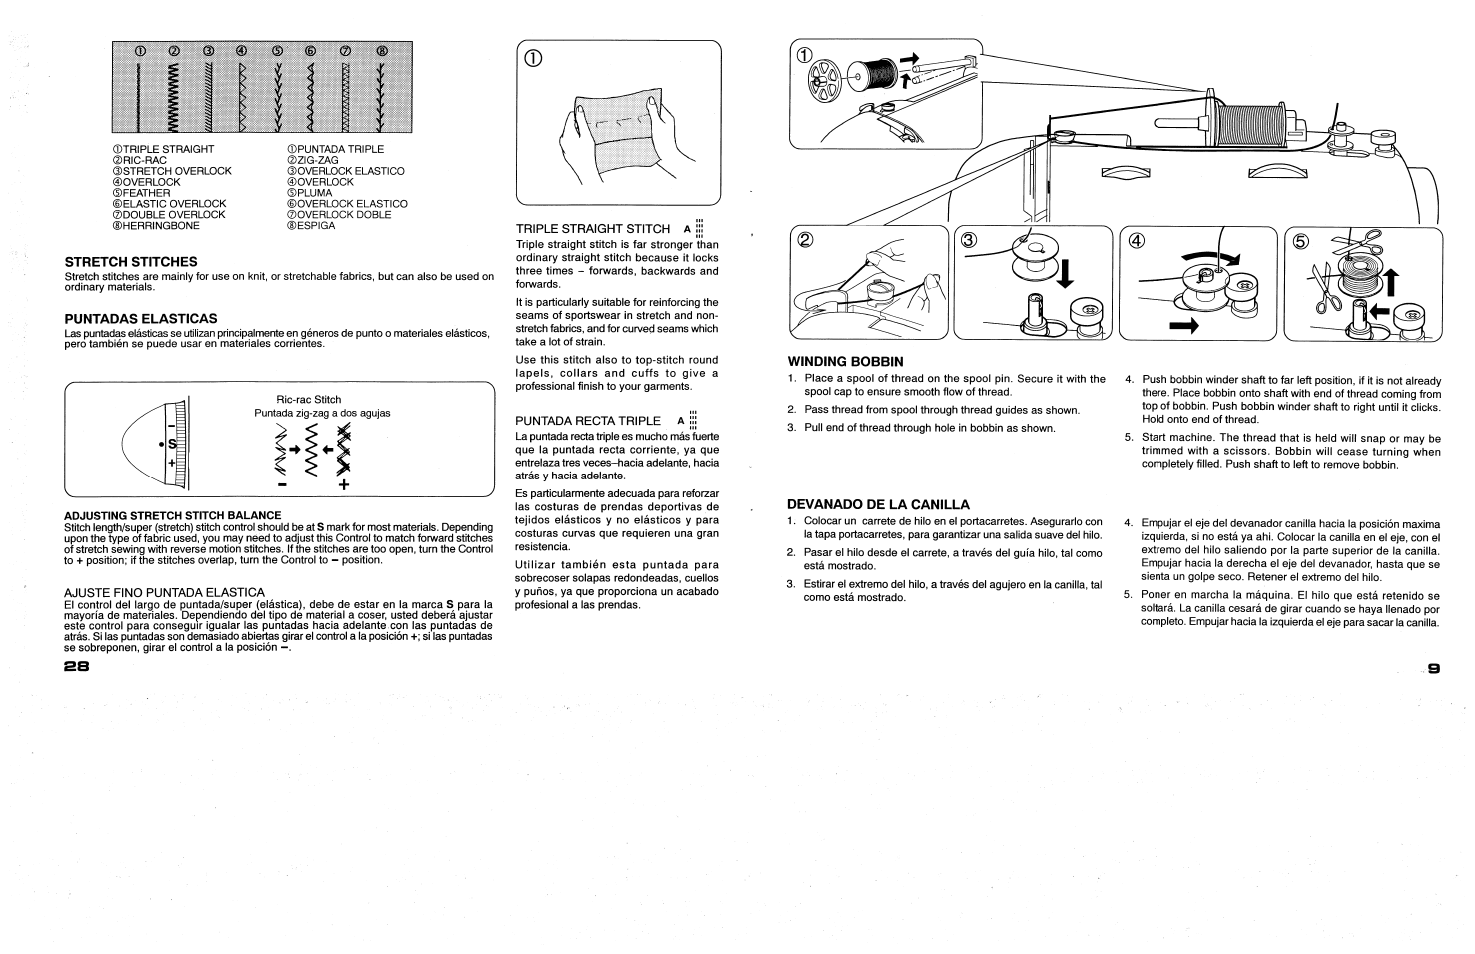 Winding bobbin, Devanado de la canilla | SINGER 117 FEATHERWEIGHT II User Manual | Page 11 / 40